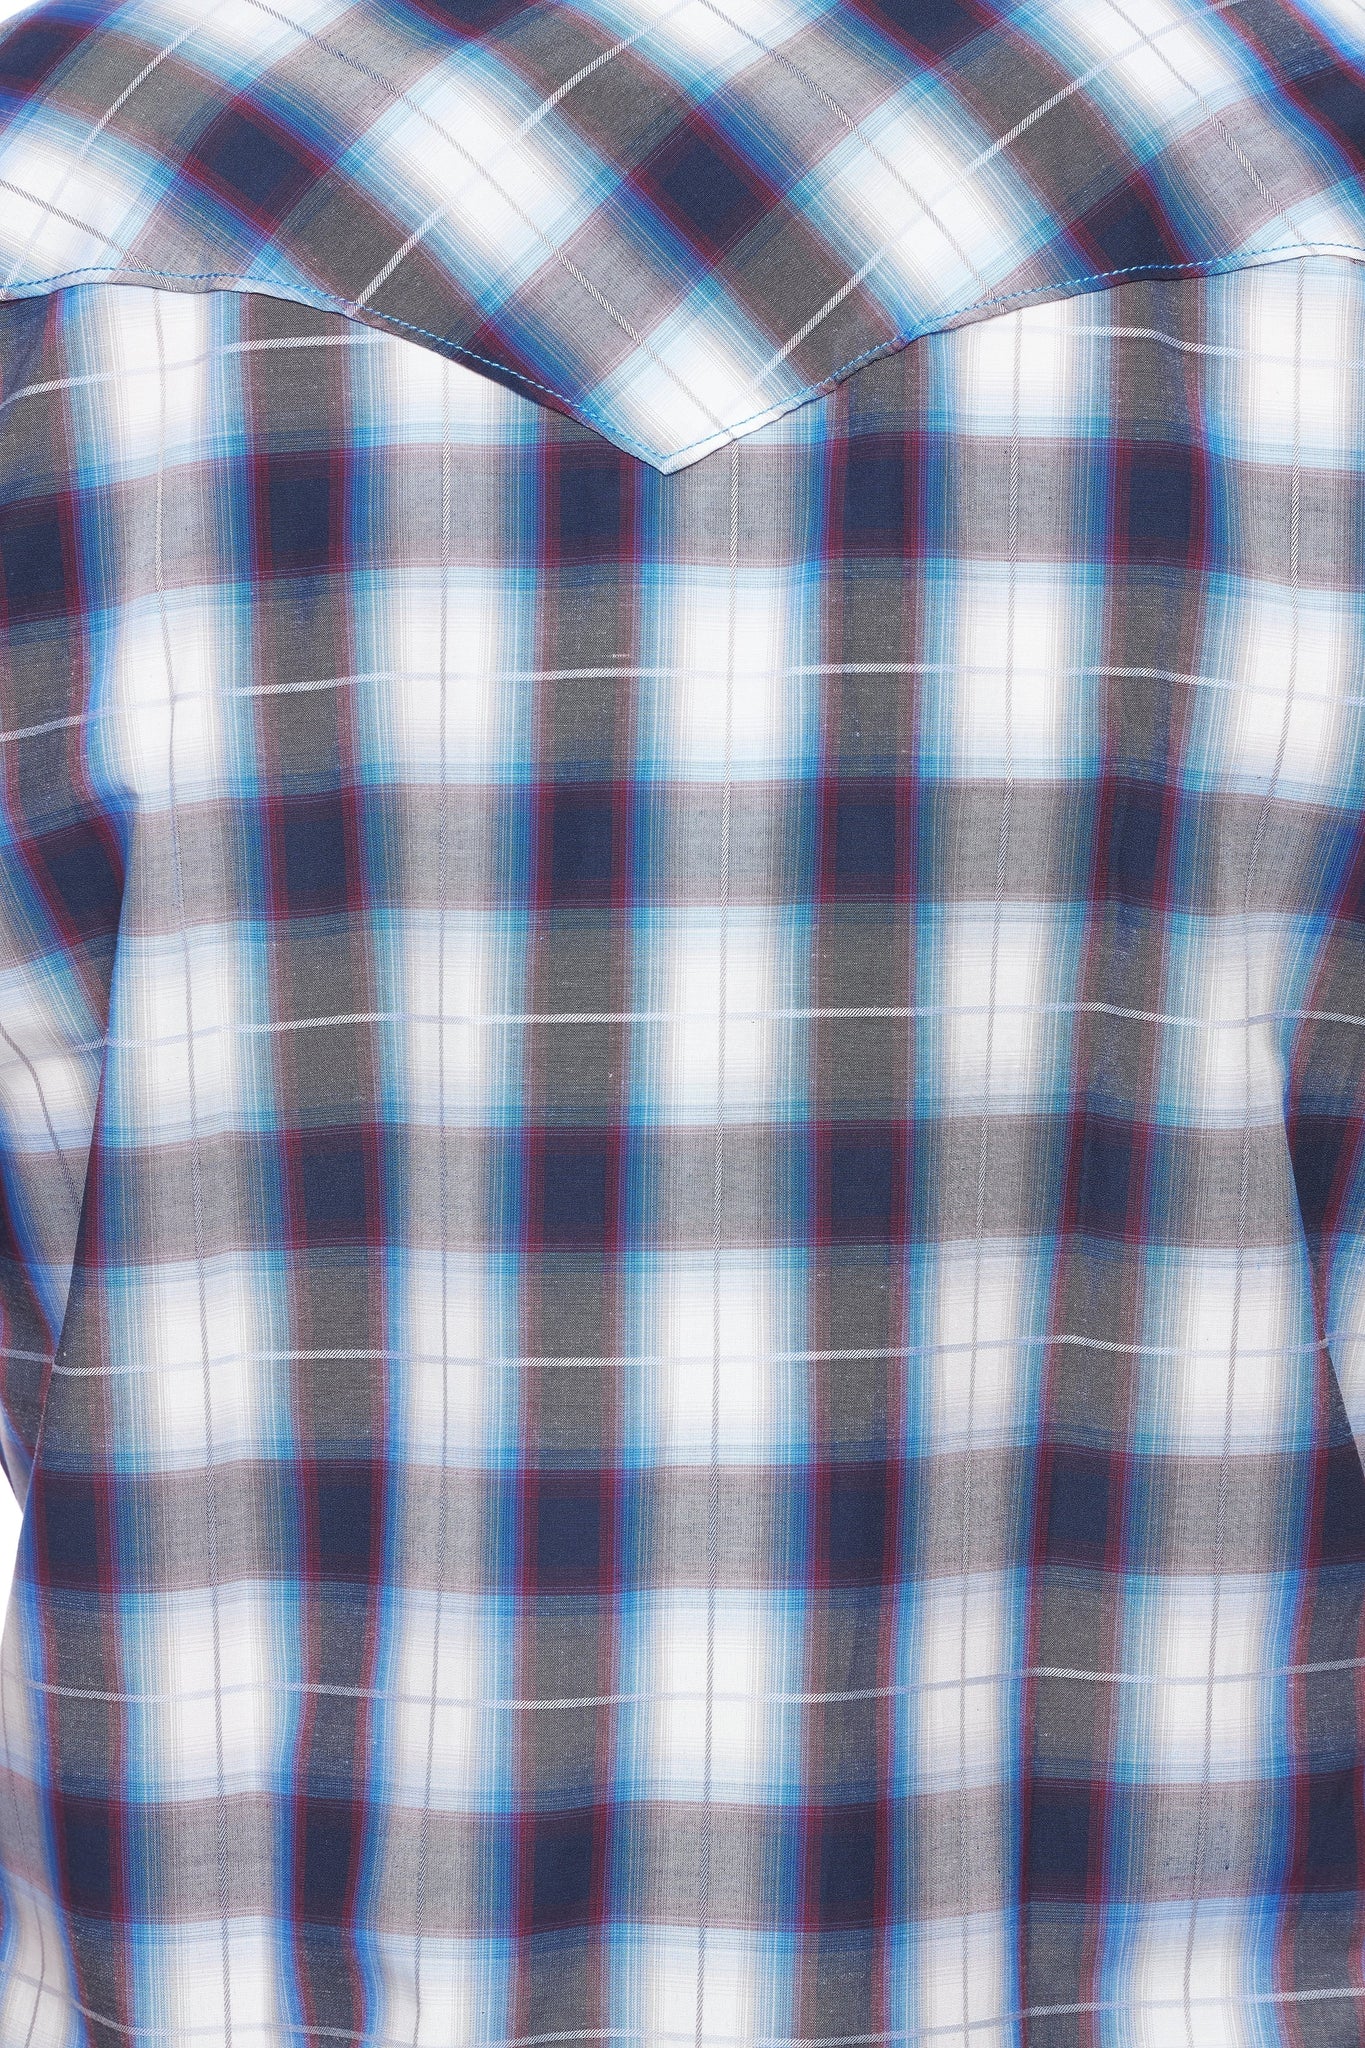 Men's Western Short Sleeve Pearl Snaps Plaid Shirt -PS400S-470